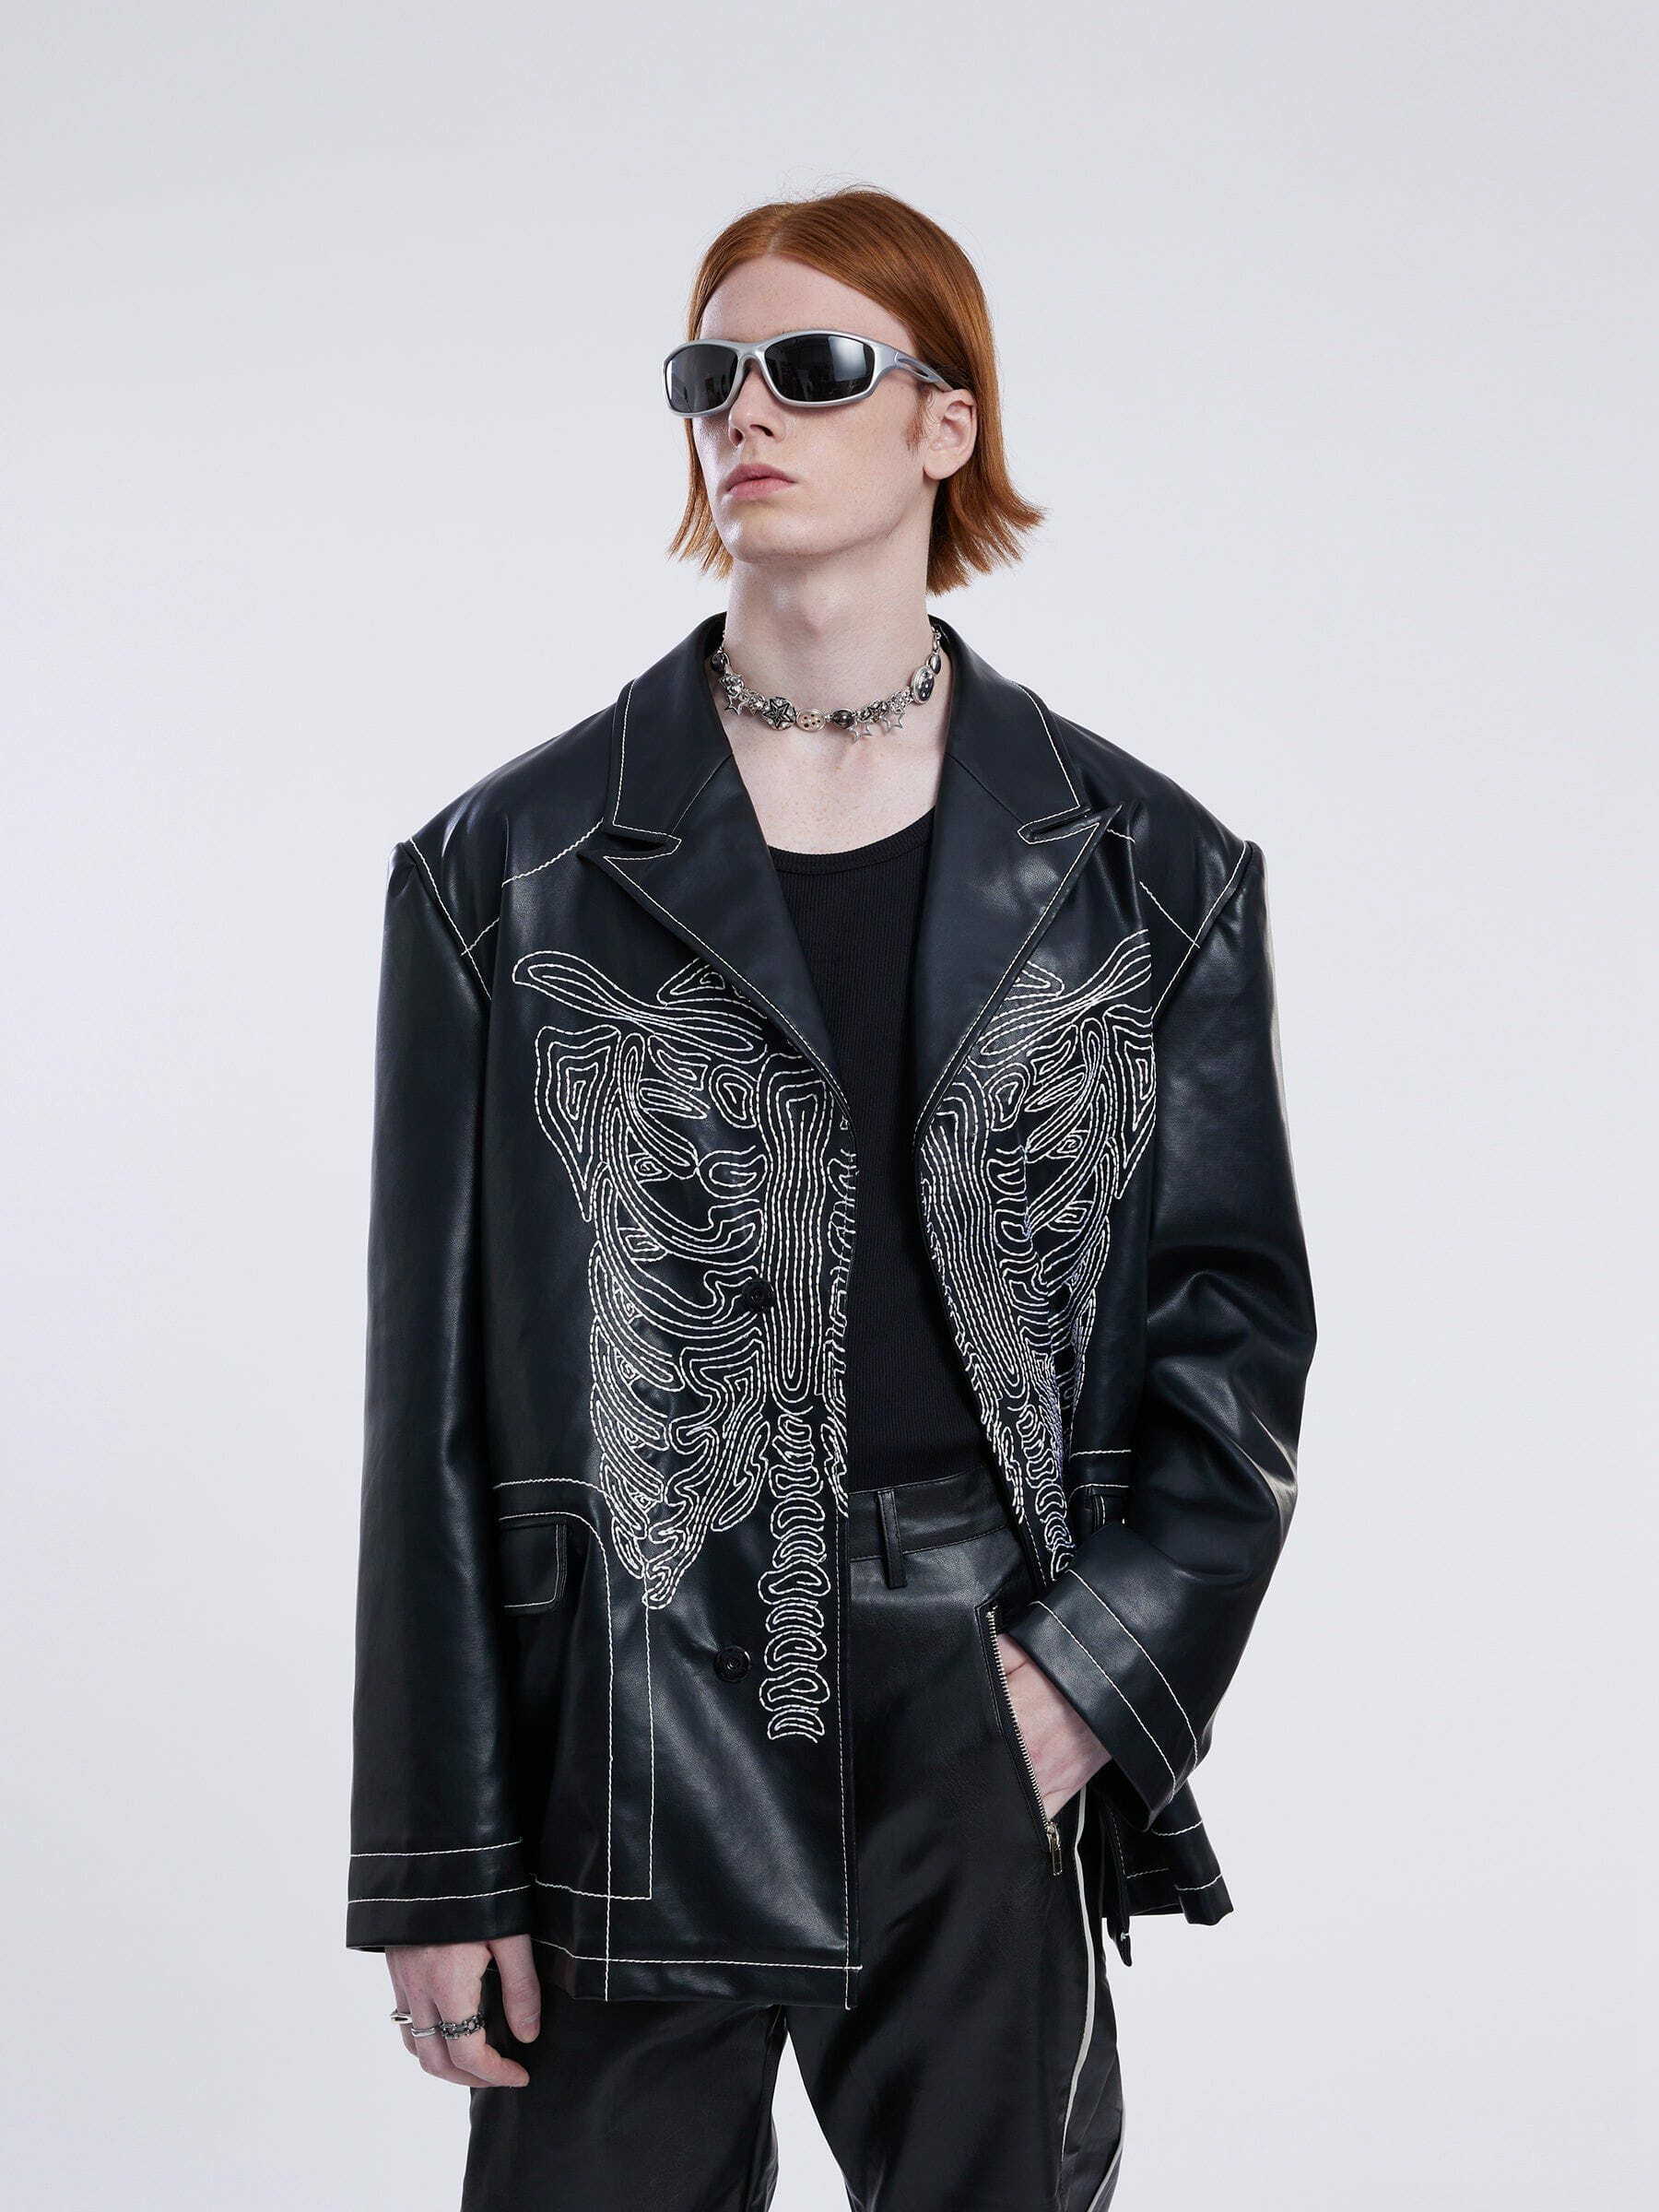 classic black skull jacket [edgy] streetwear essential 2549